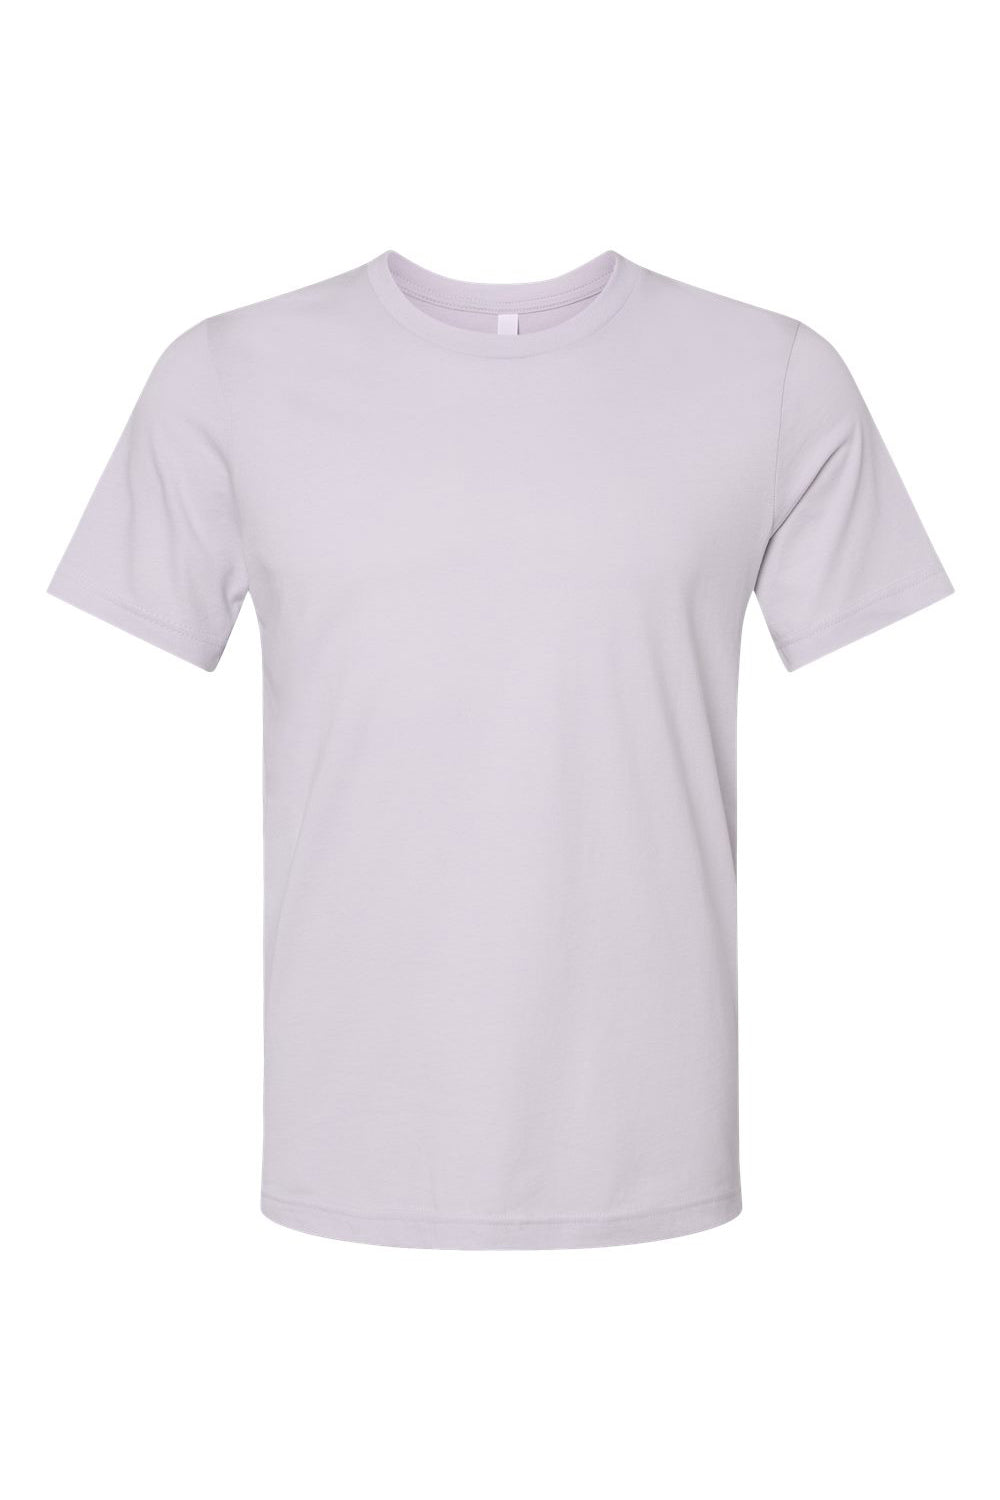 Bella + Canvas BC3001/3001C Mens Jersey Short Sleeve Crewneck T-Shirt Lavender Dust Flat Front